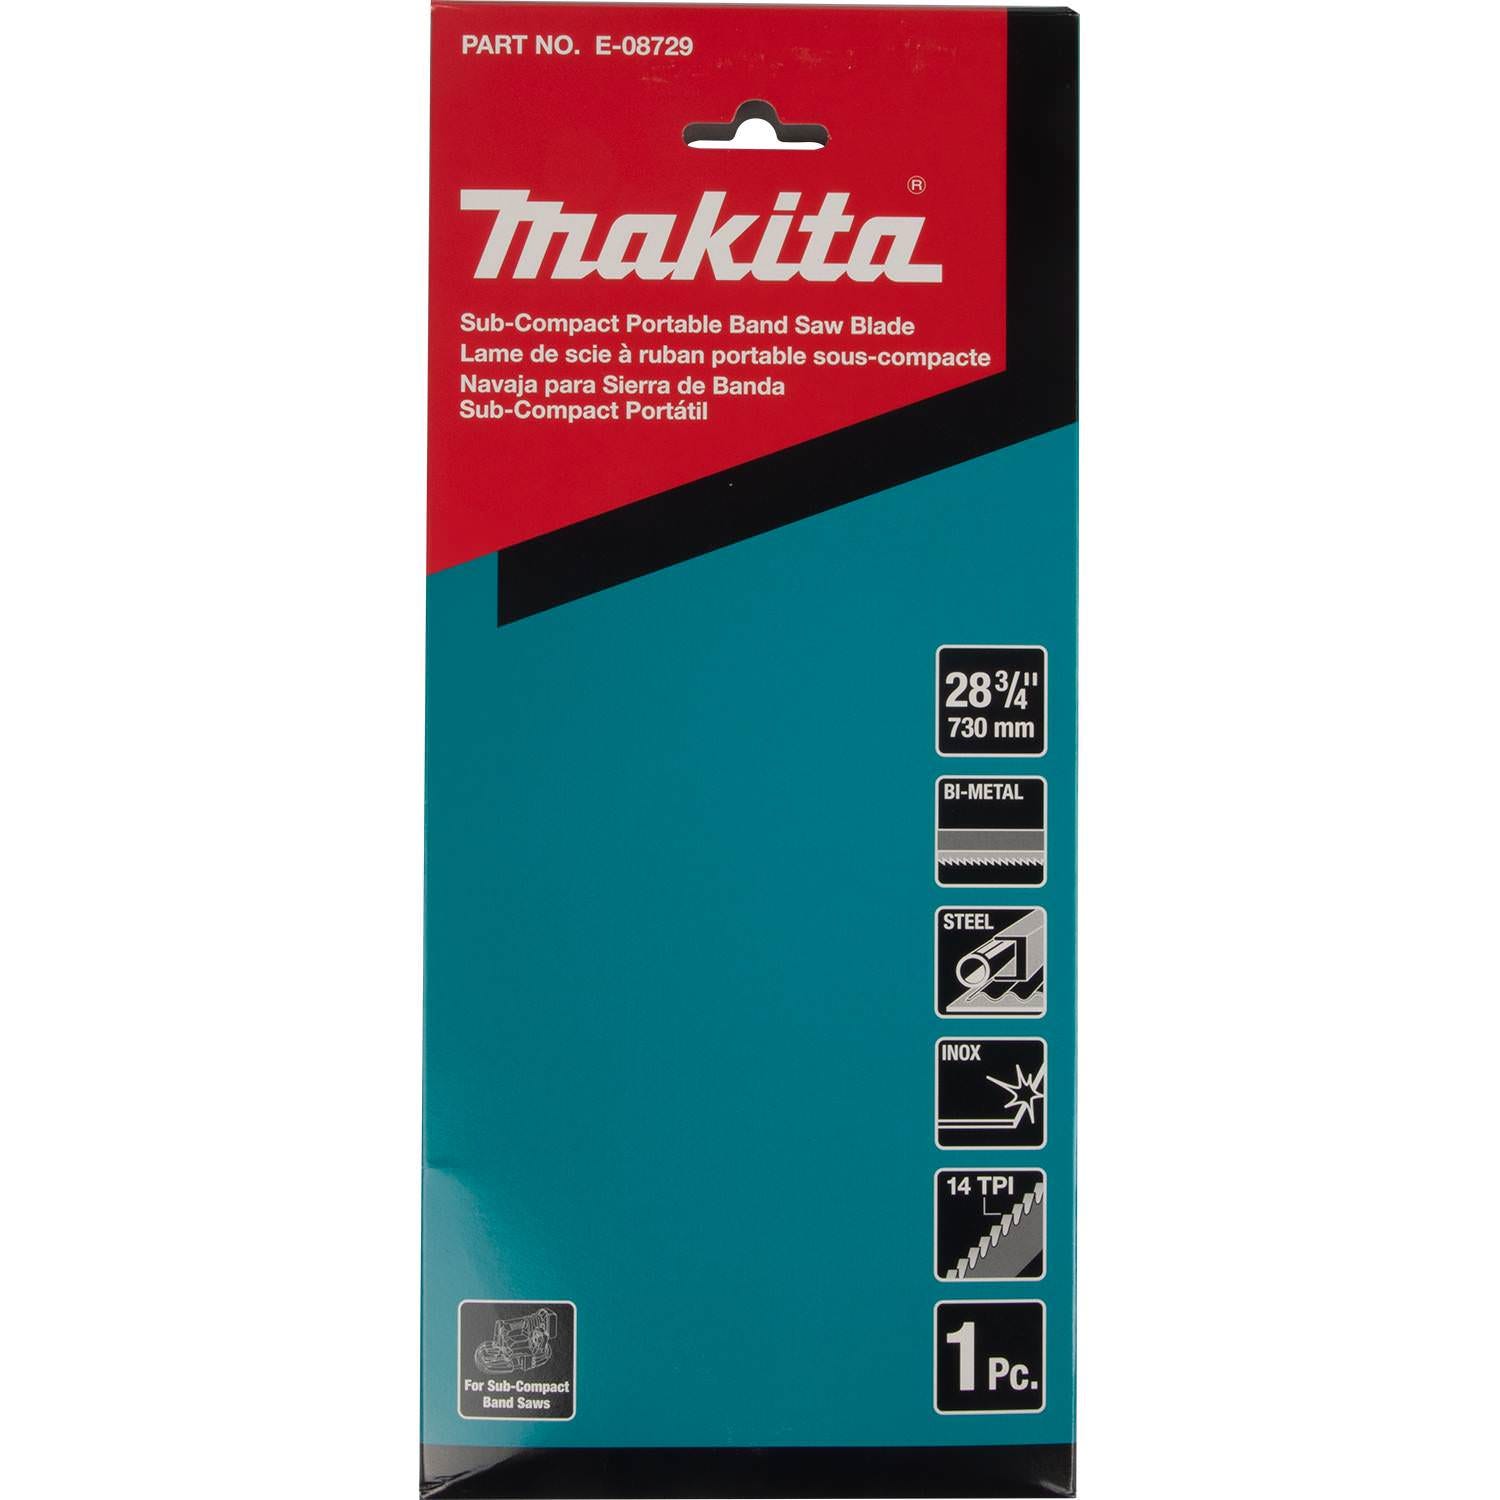 Makita XBP05R1B 18V LXT(R) Lithium-Ion Sub-Compact Brushless Cordless Band Saw Kit (2.0Ah) - 1